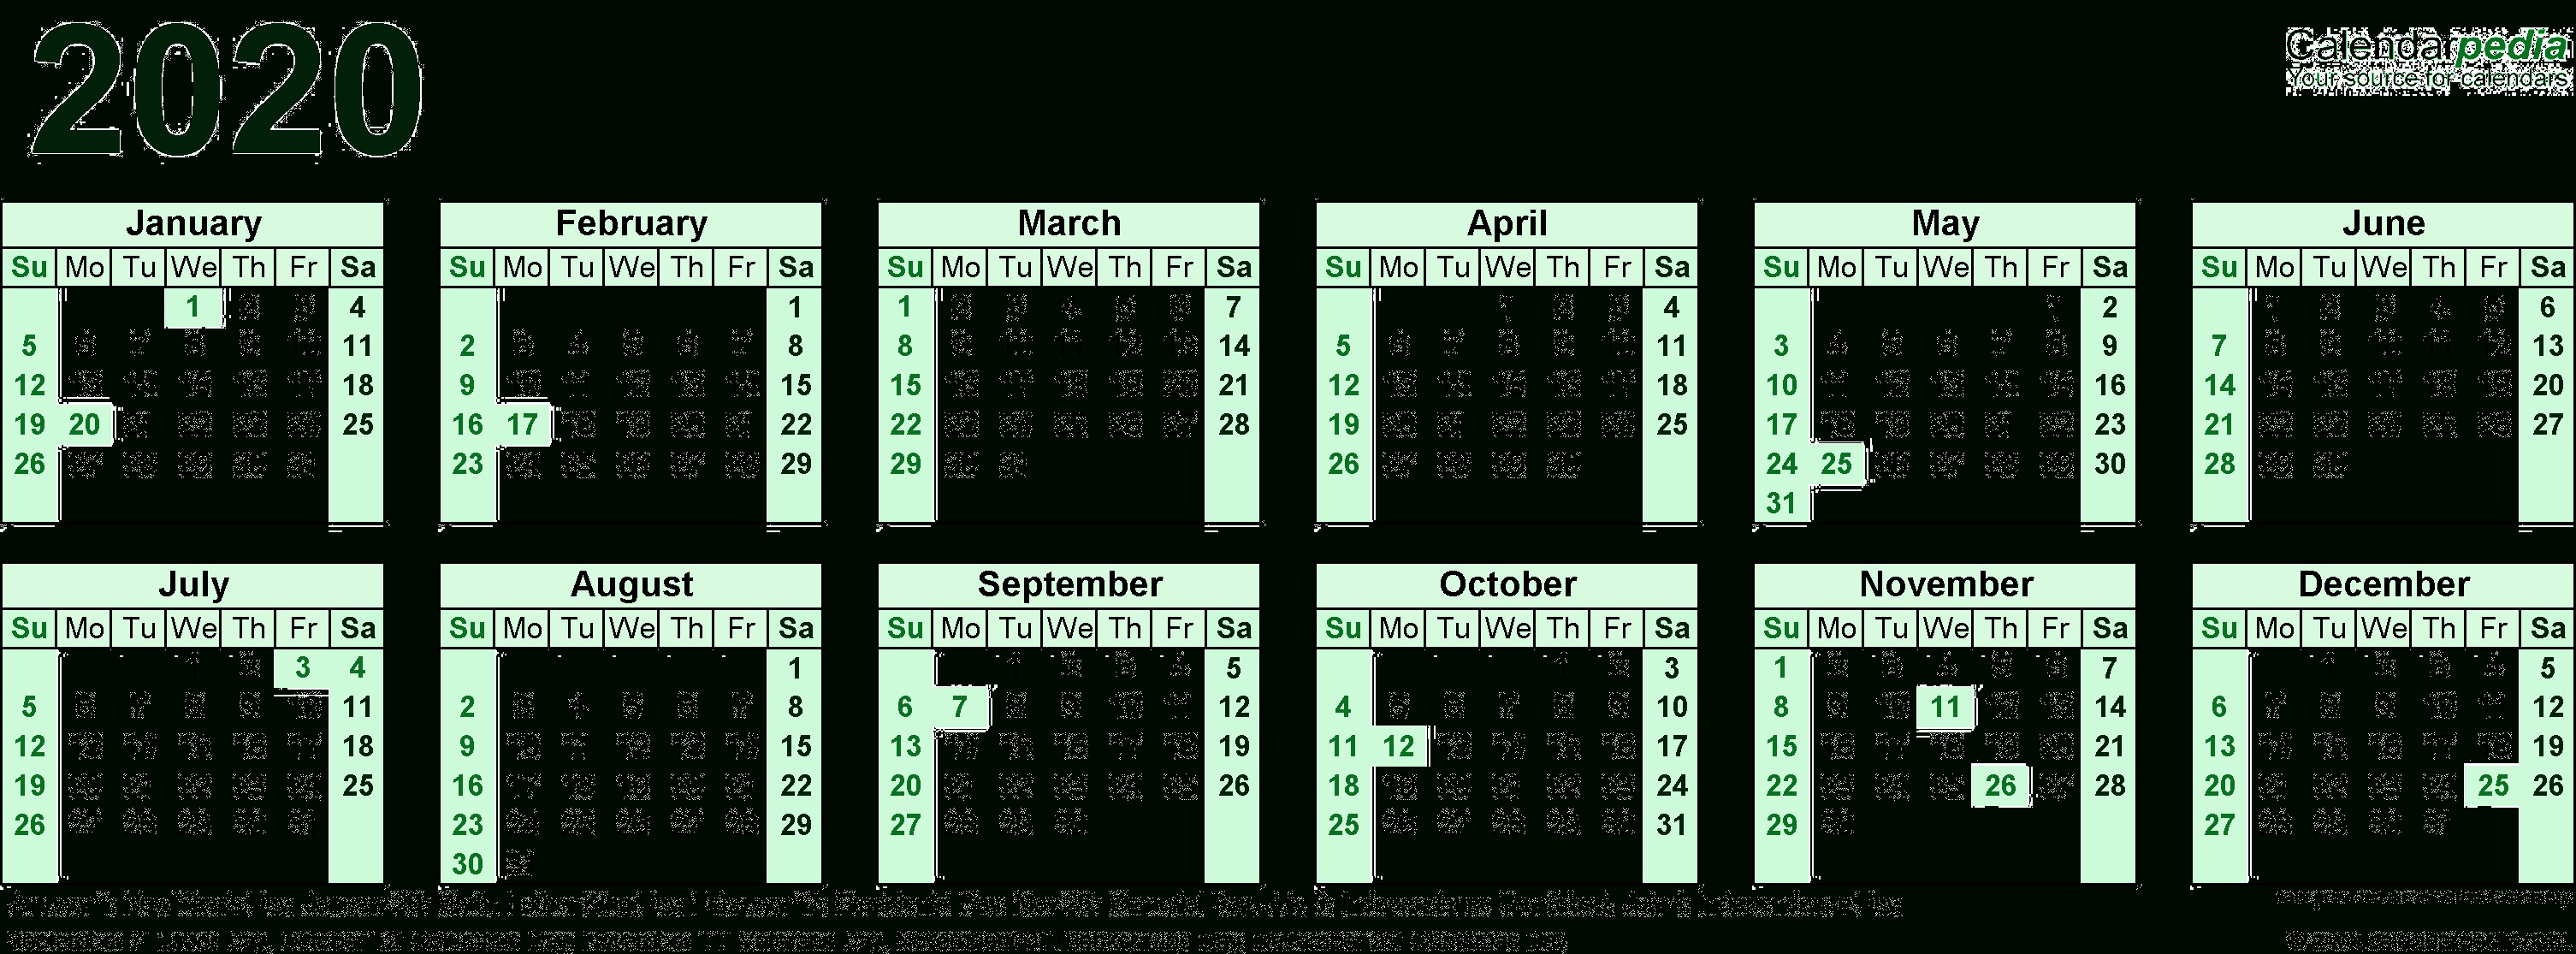 2020 Calendar Png Transparent Images | Png All for January 2020 Calendar Png